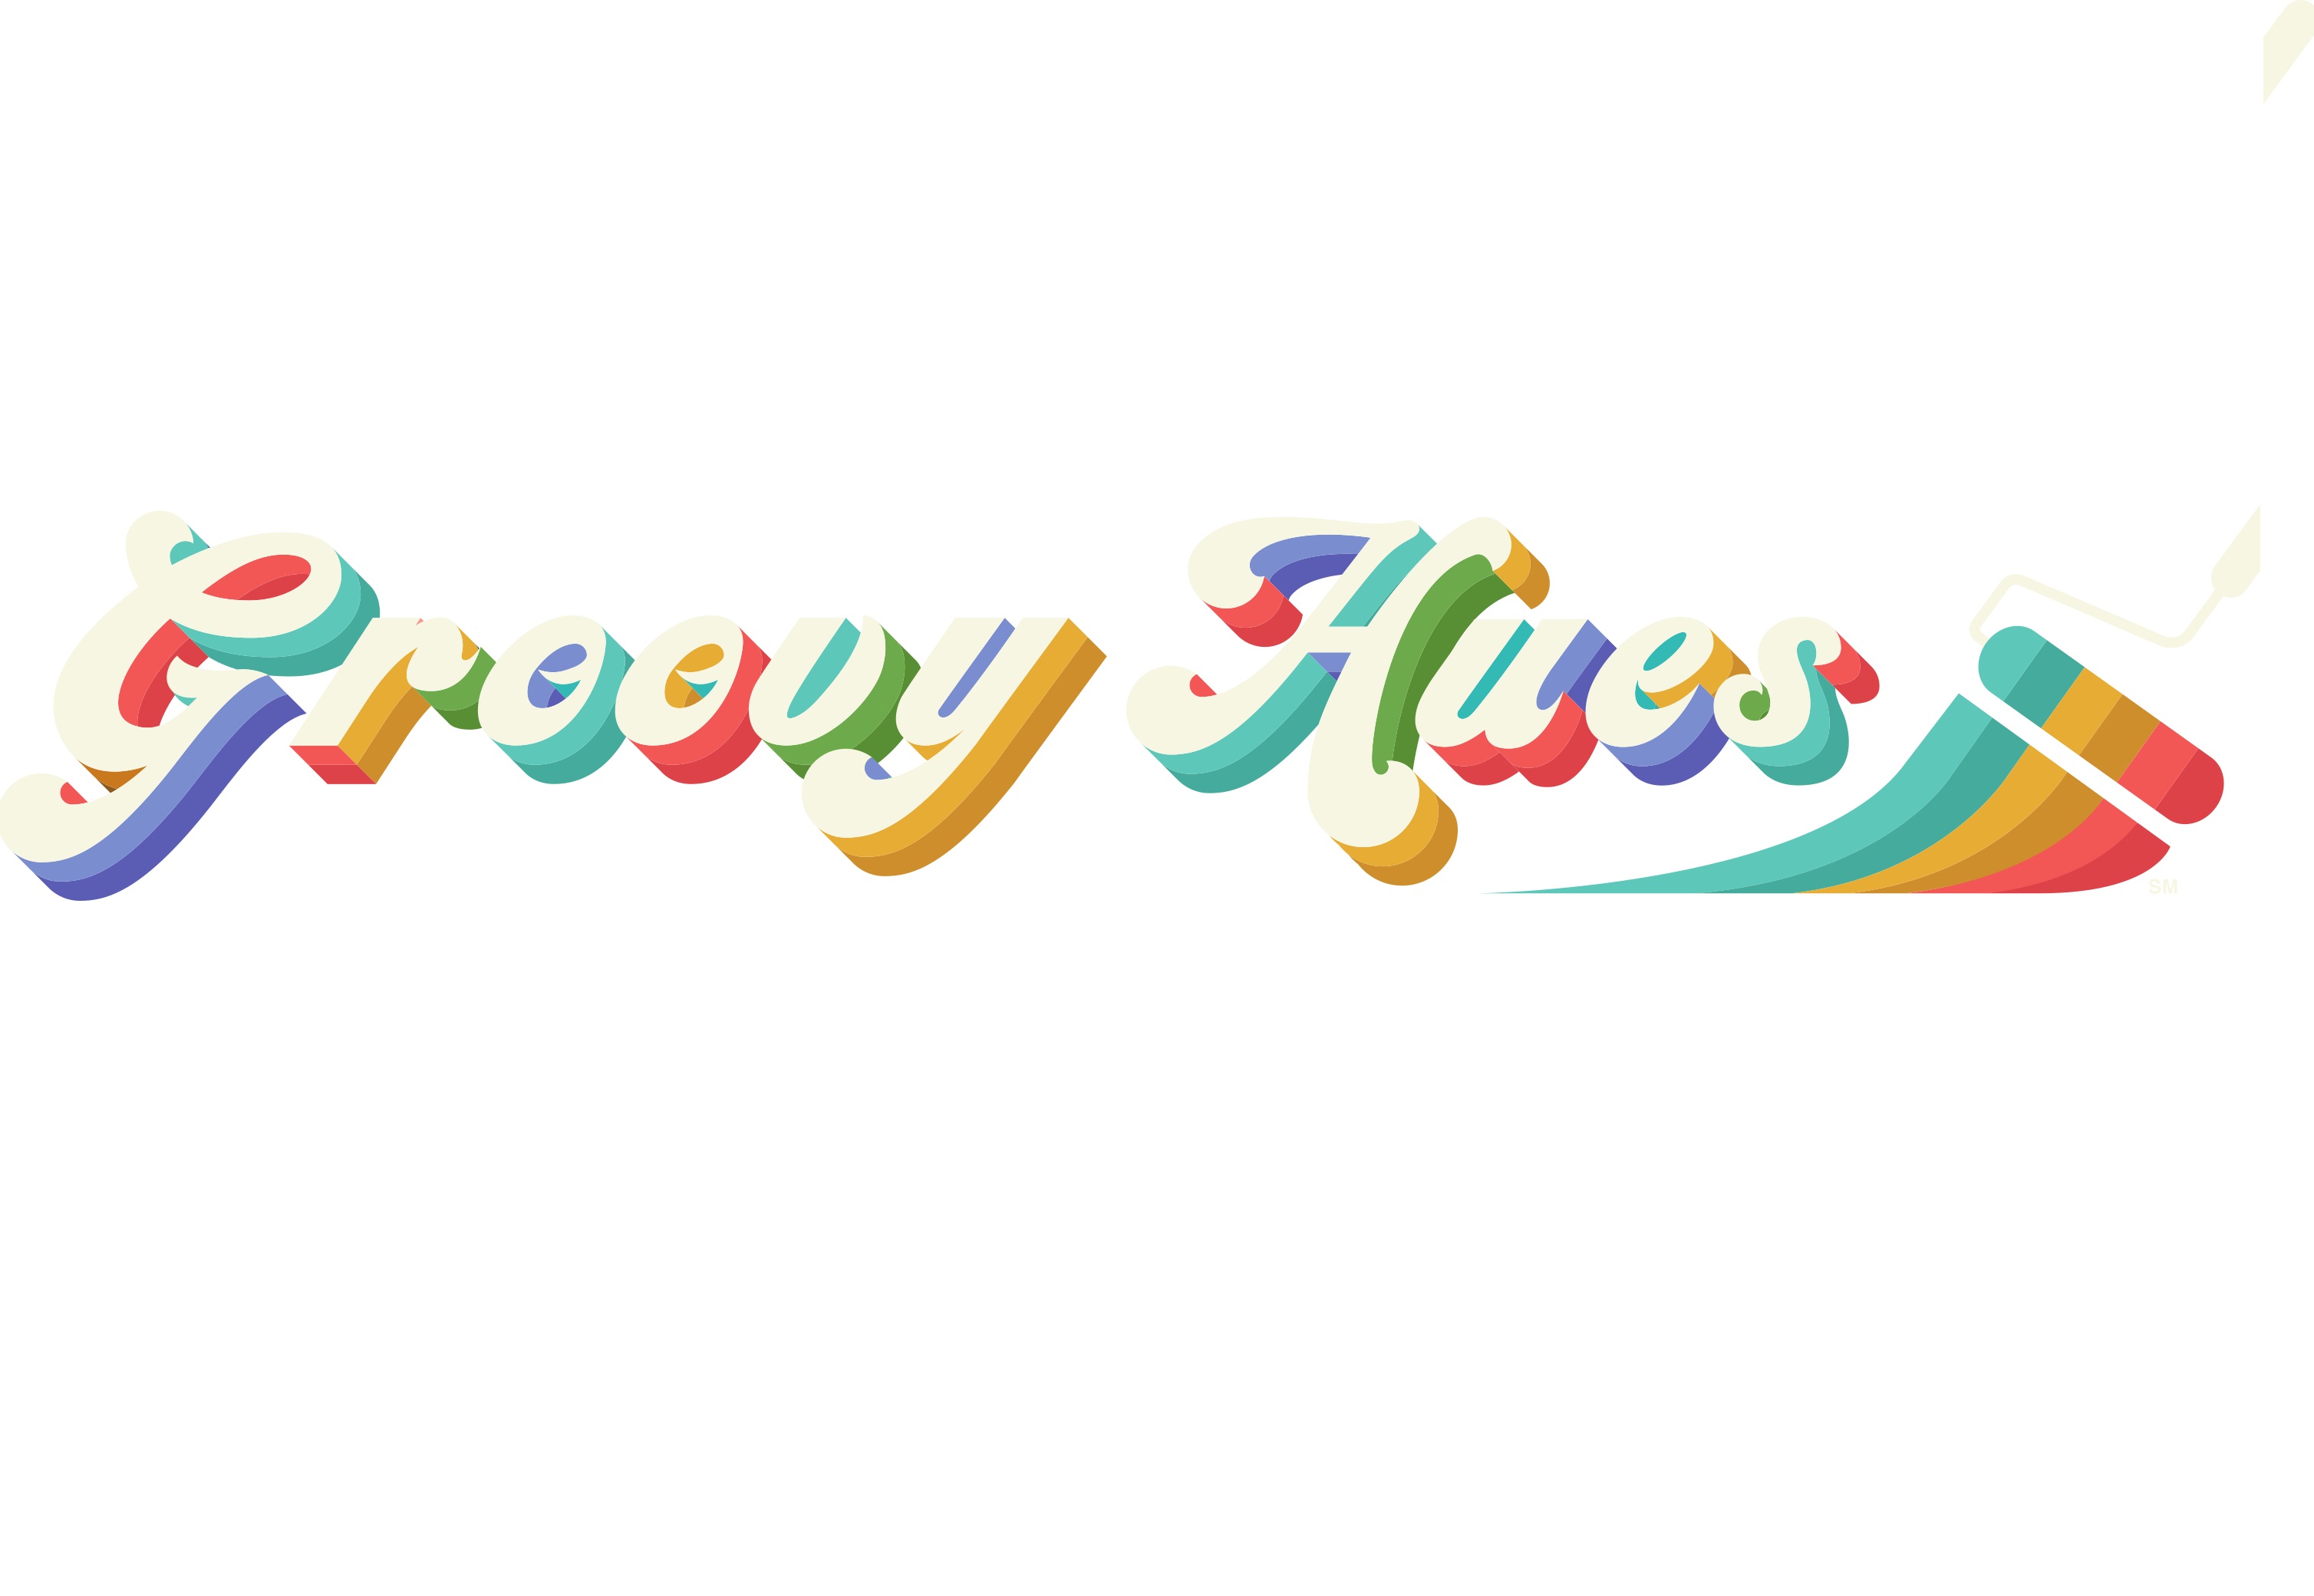 Groovy-logo2-3.jpg